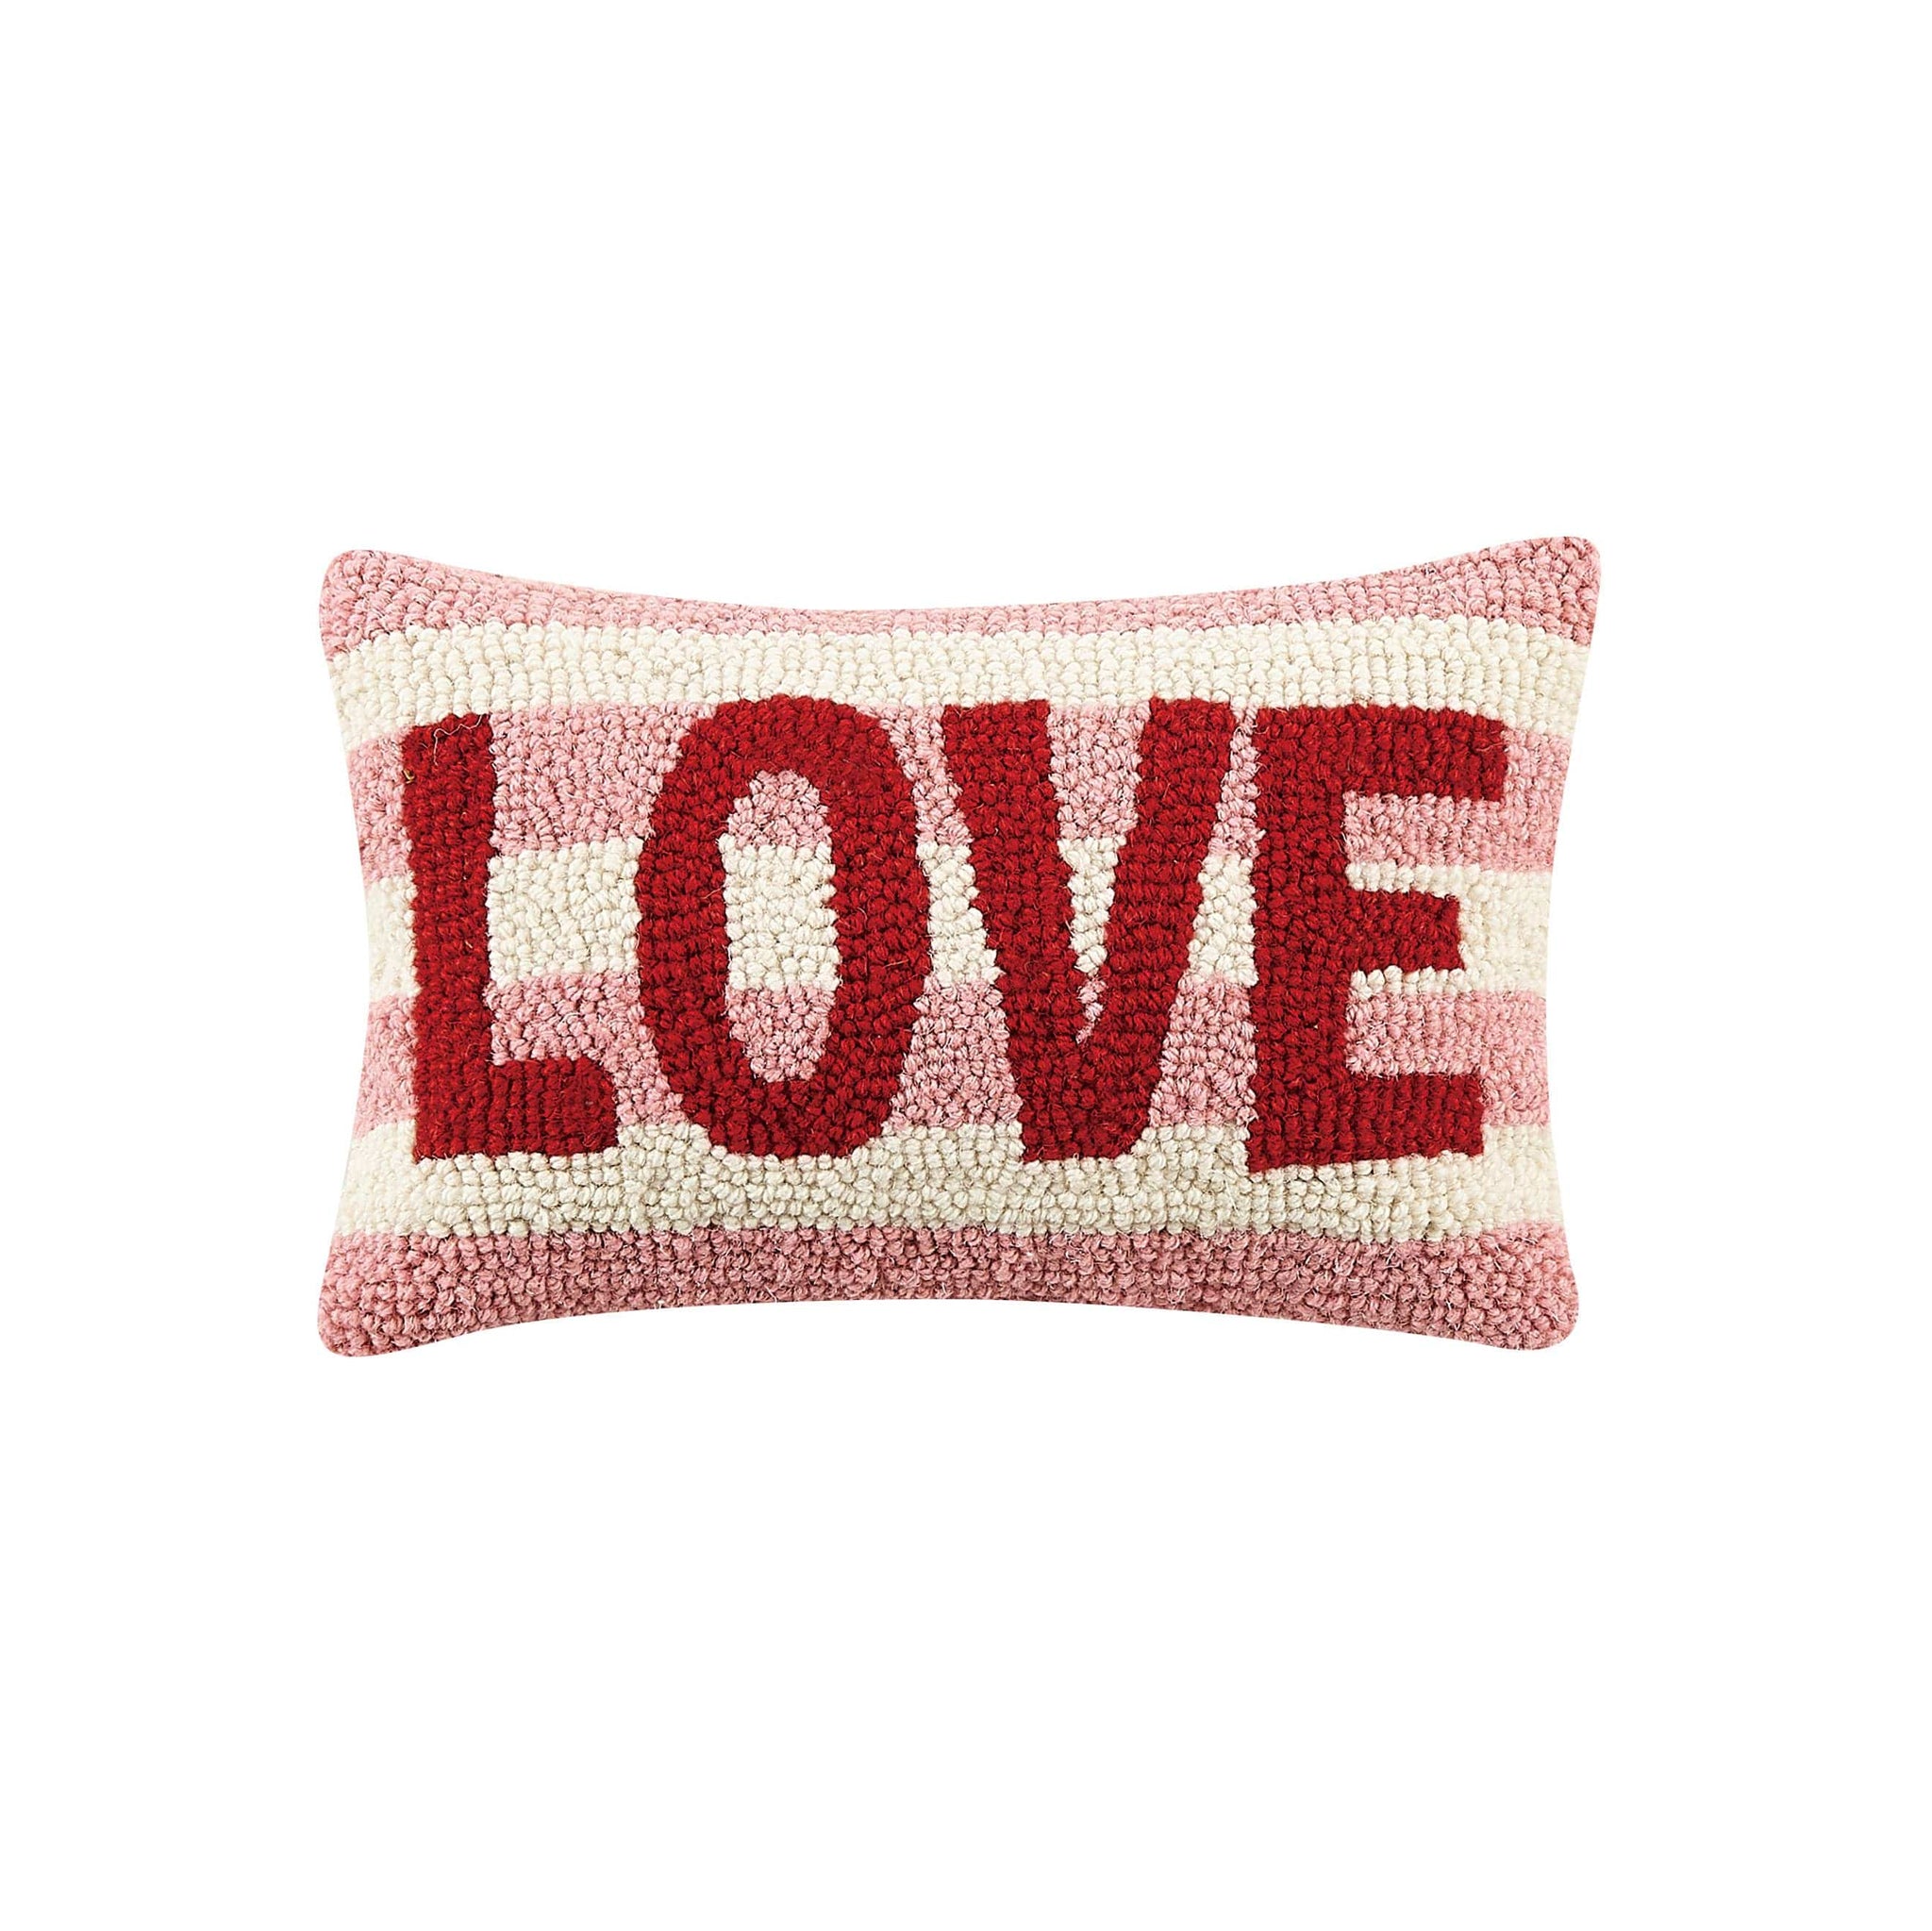 Brand of Bliss Preorder Love Hook Pillow